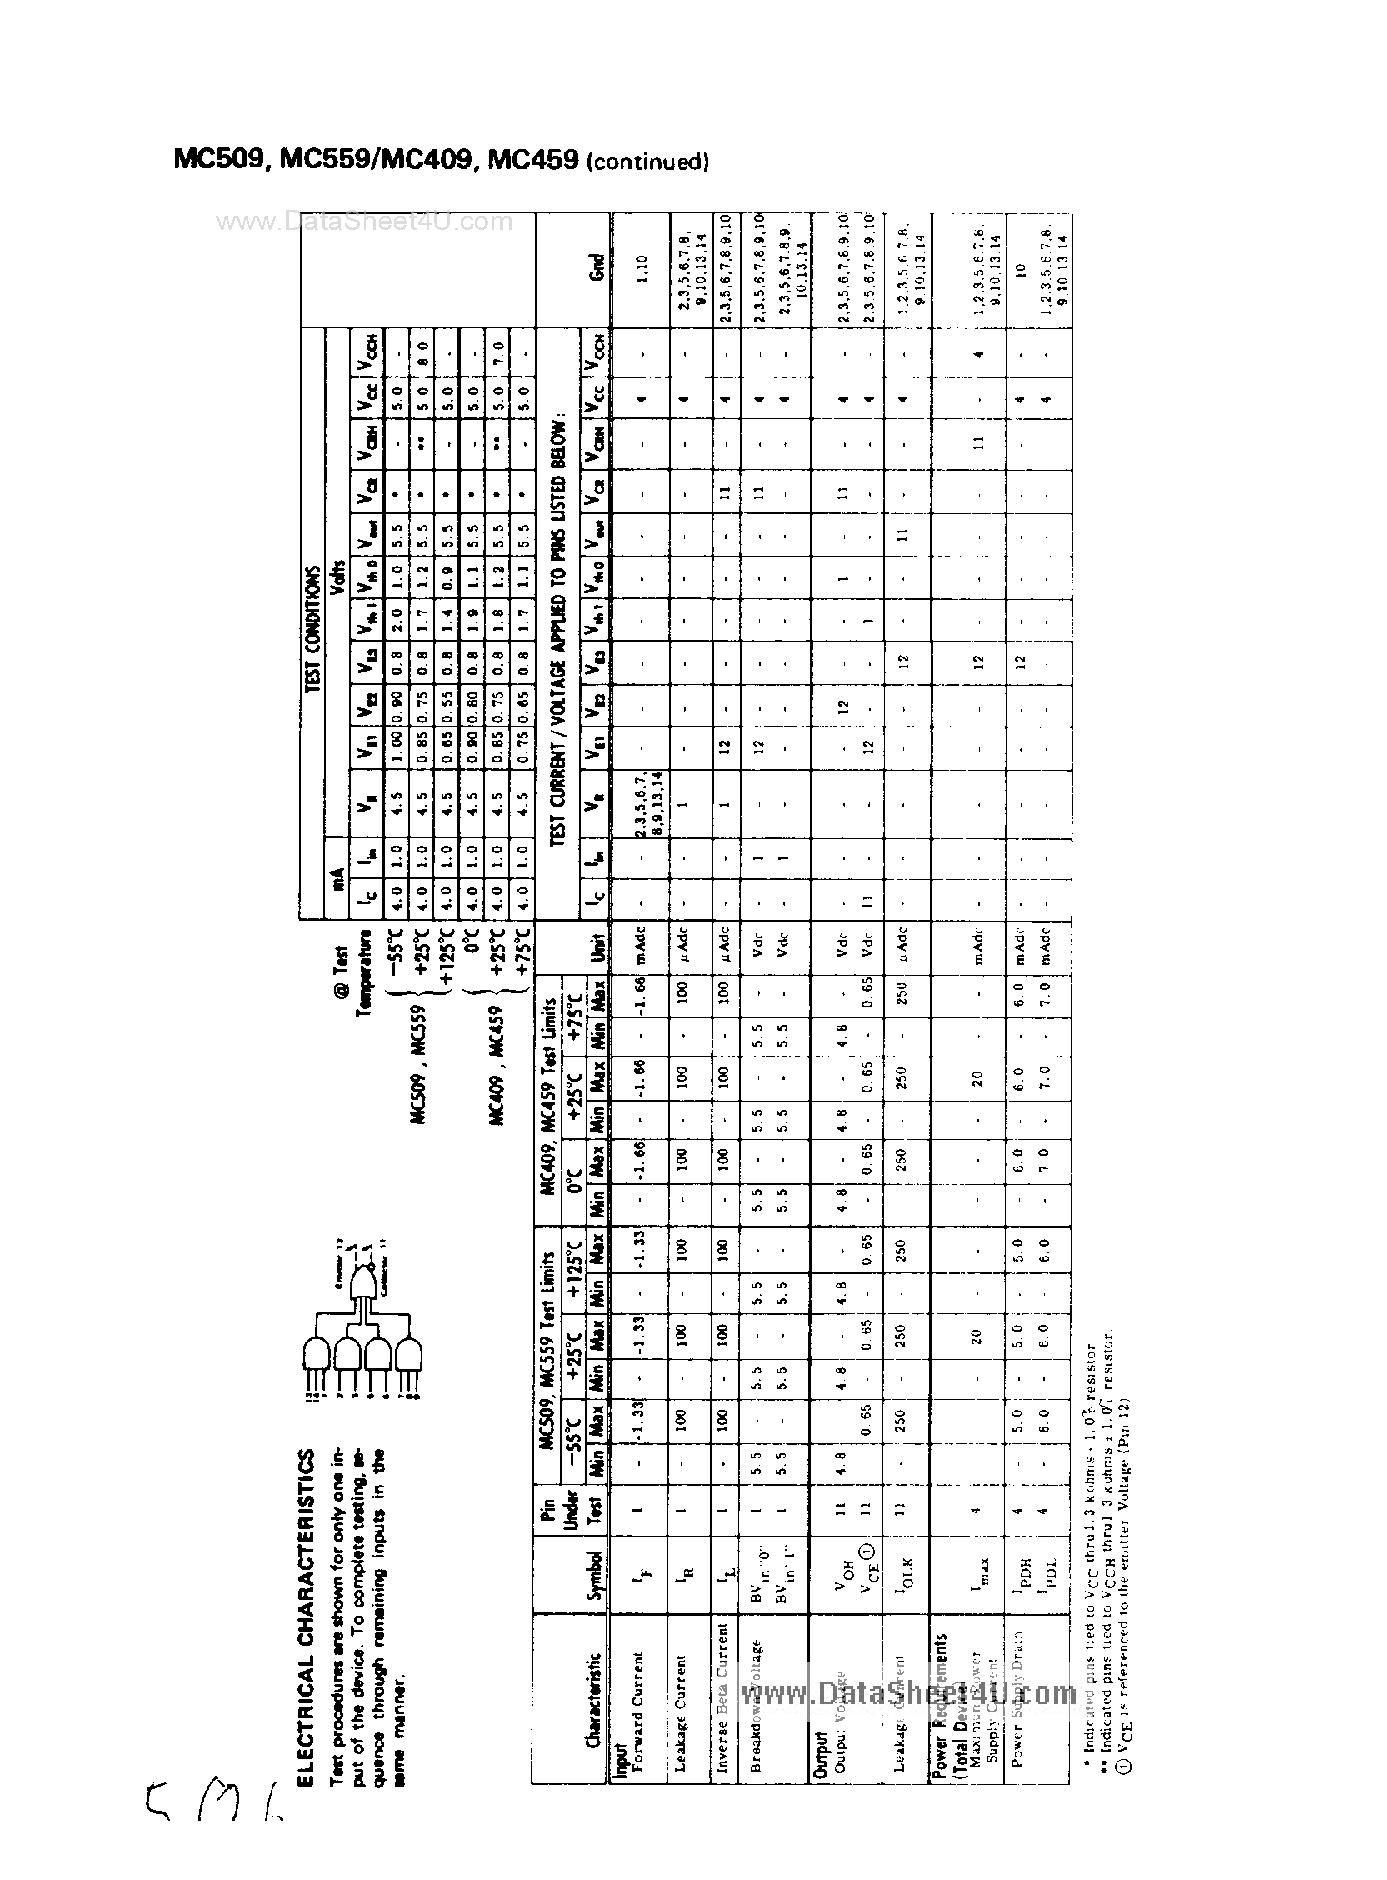 Datasheet MC509 - (MC509 / MC559) 4 wide 3-2-2-3 input expander page 2